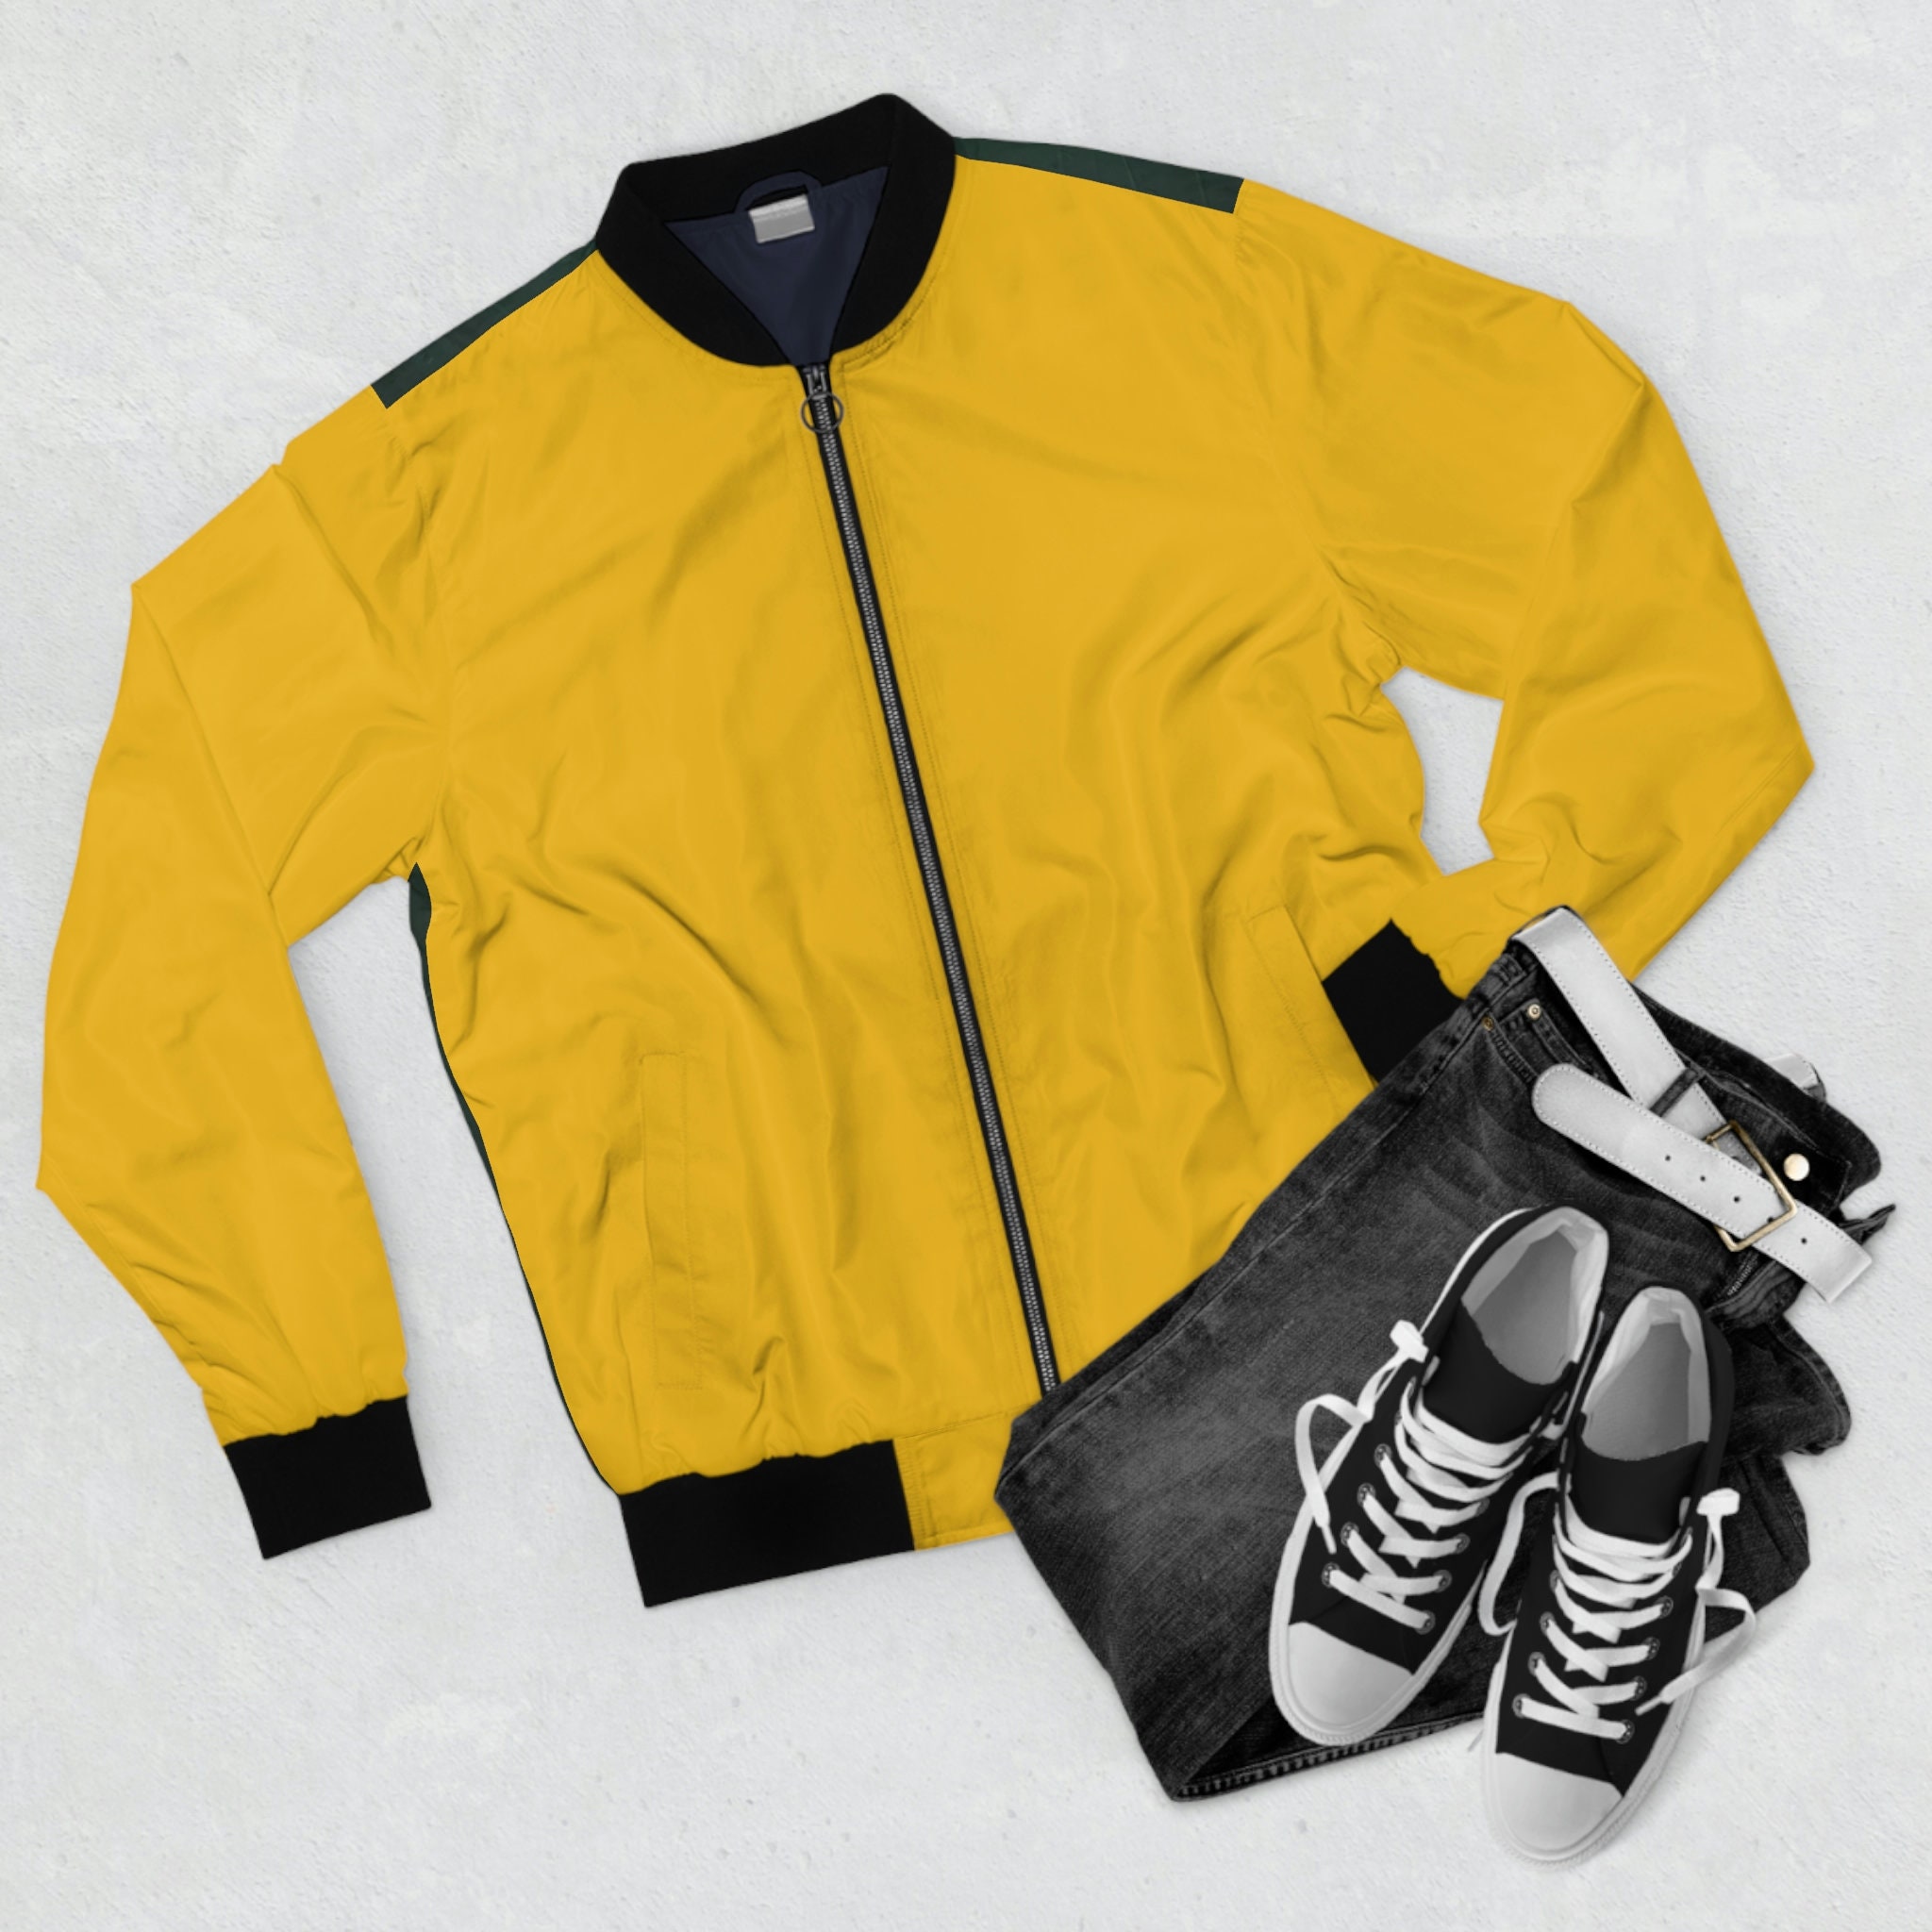 The Vibrant Yellow Jacket and Fox Fusion Men's Bomber Jacket